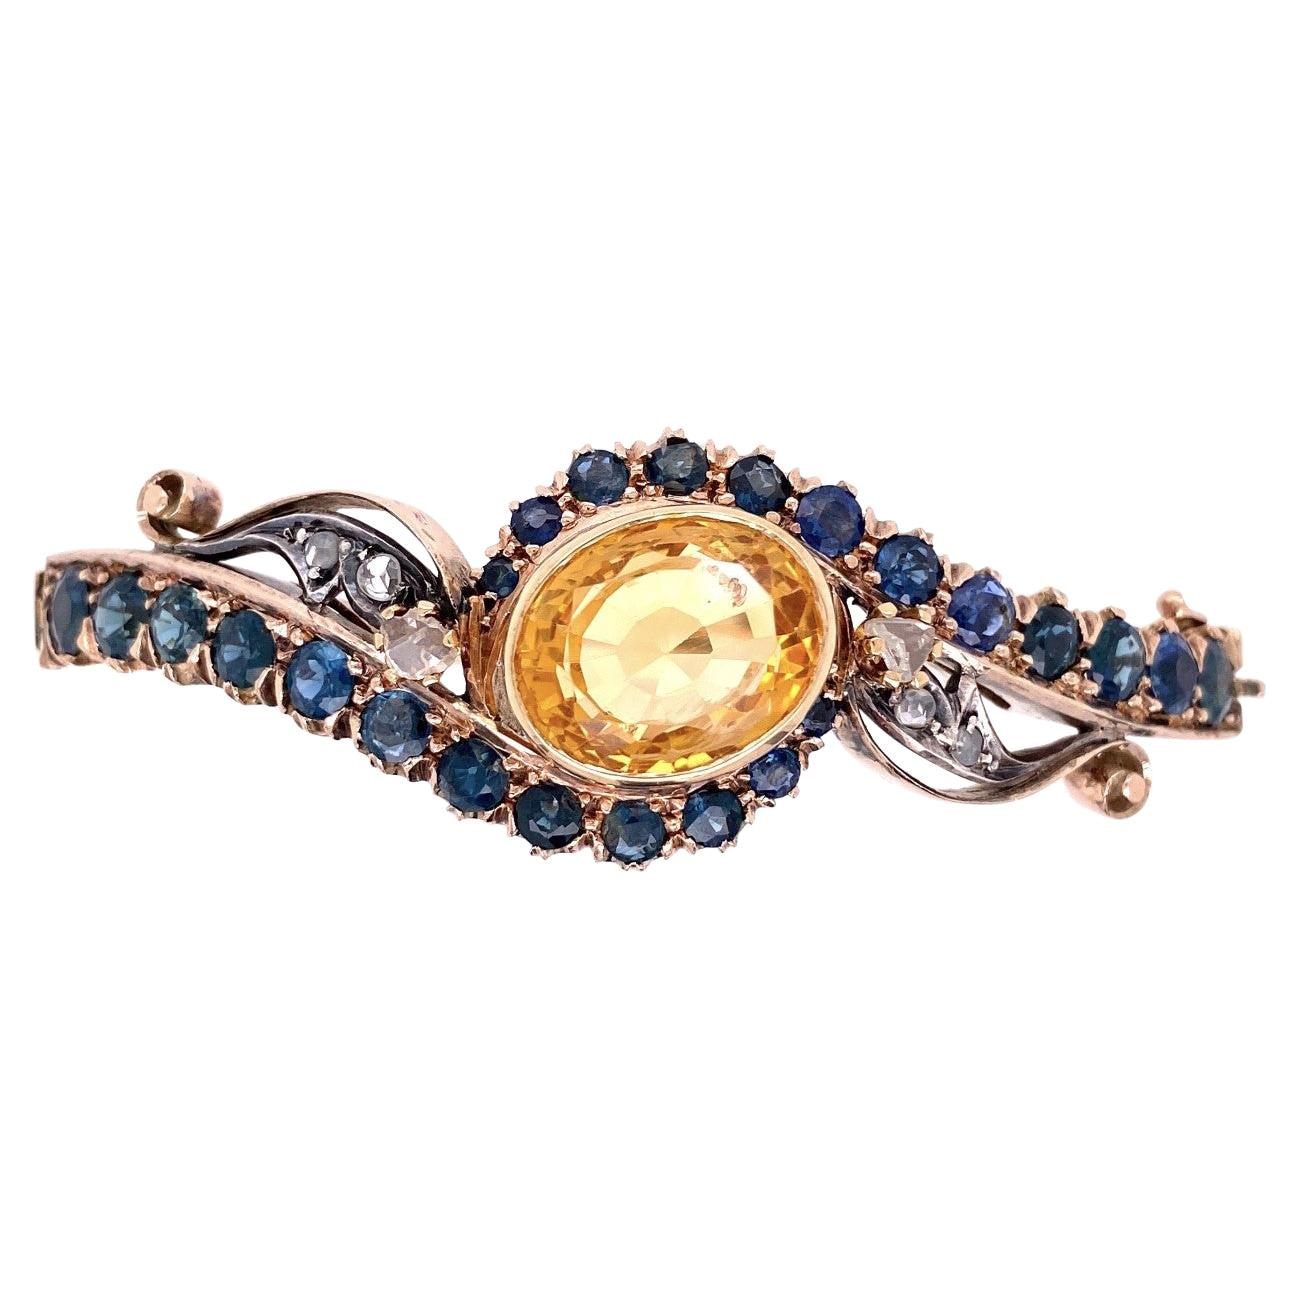 15 Karat Victorian Bangle Bracelet with Sapphires, Citrine and Diamonds 22.1g